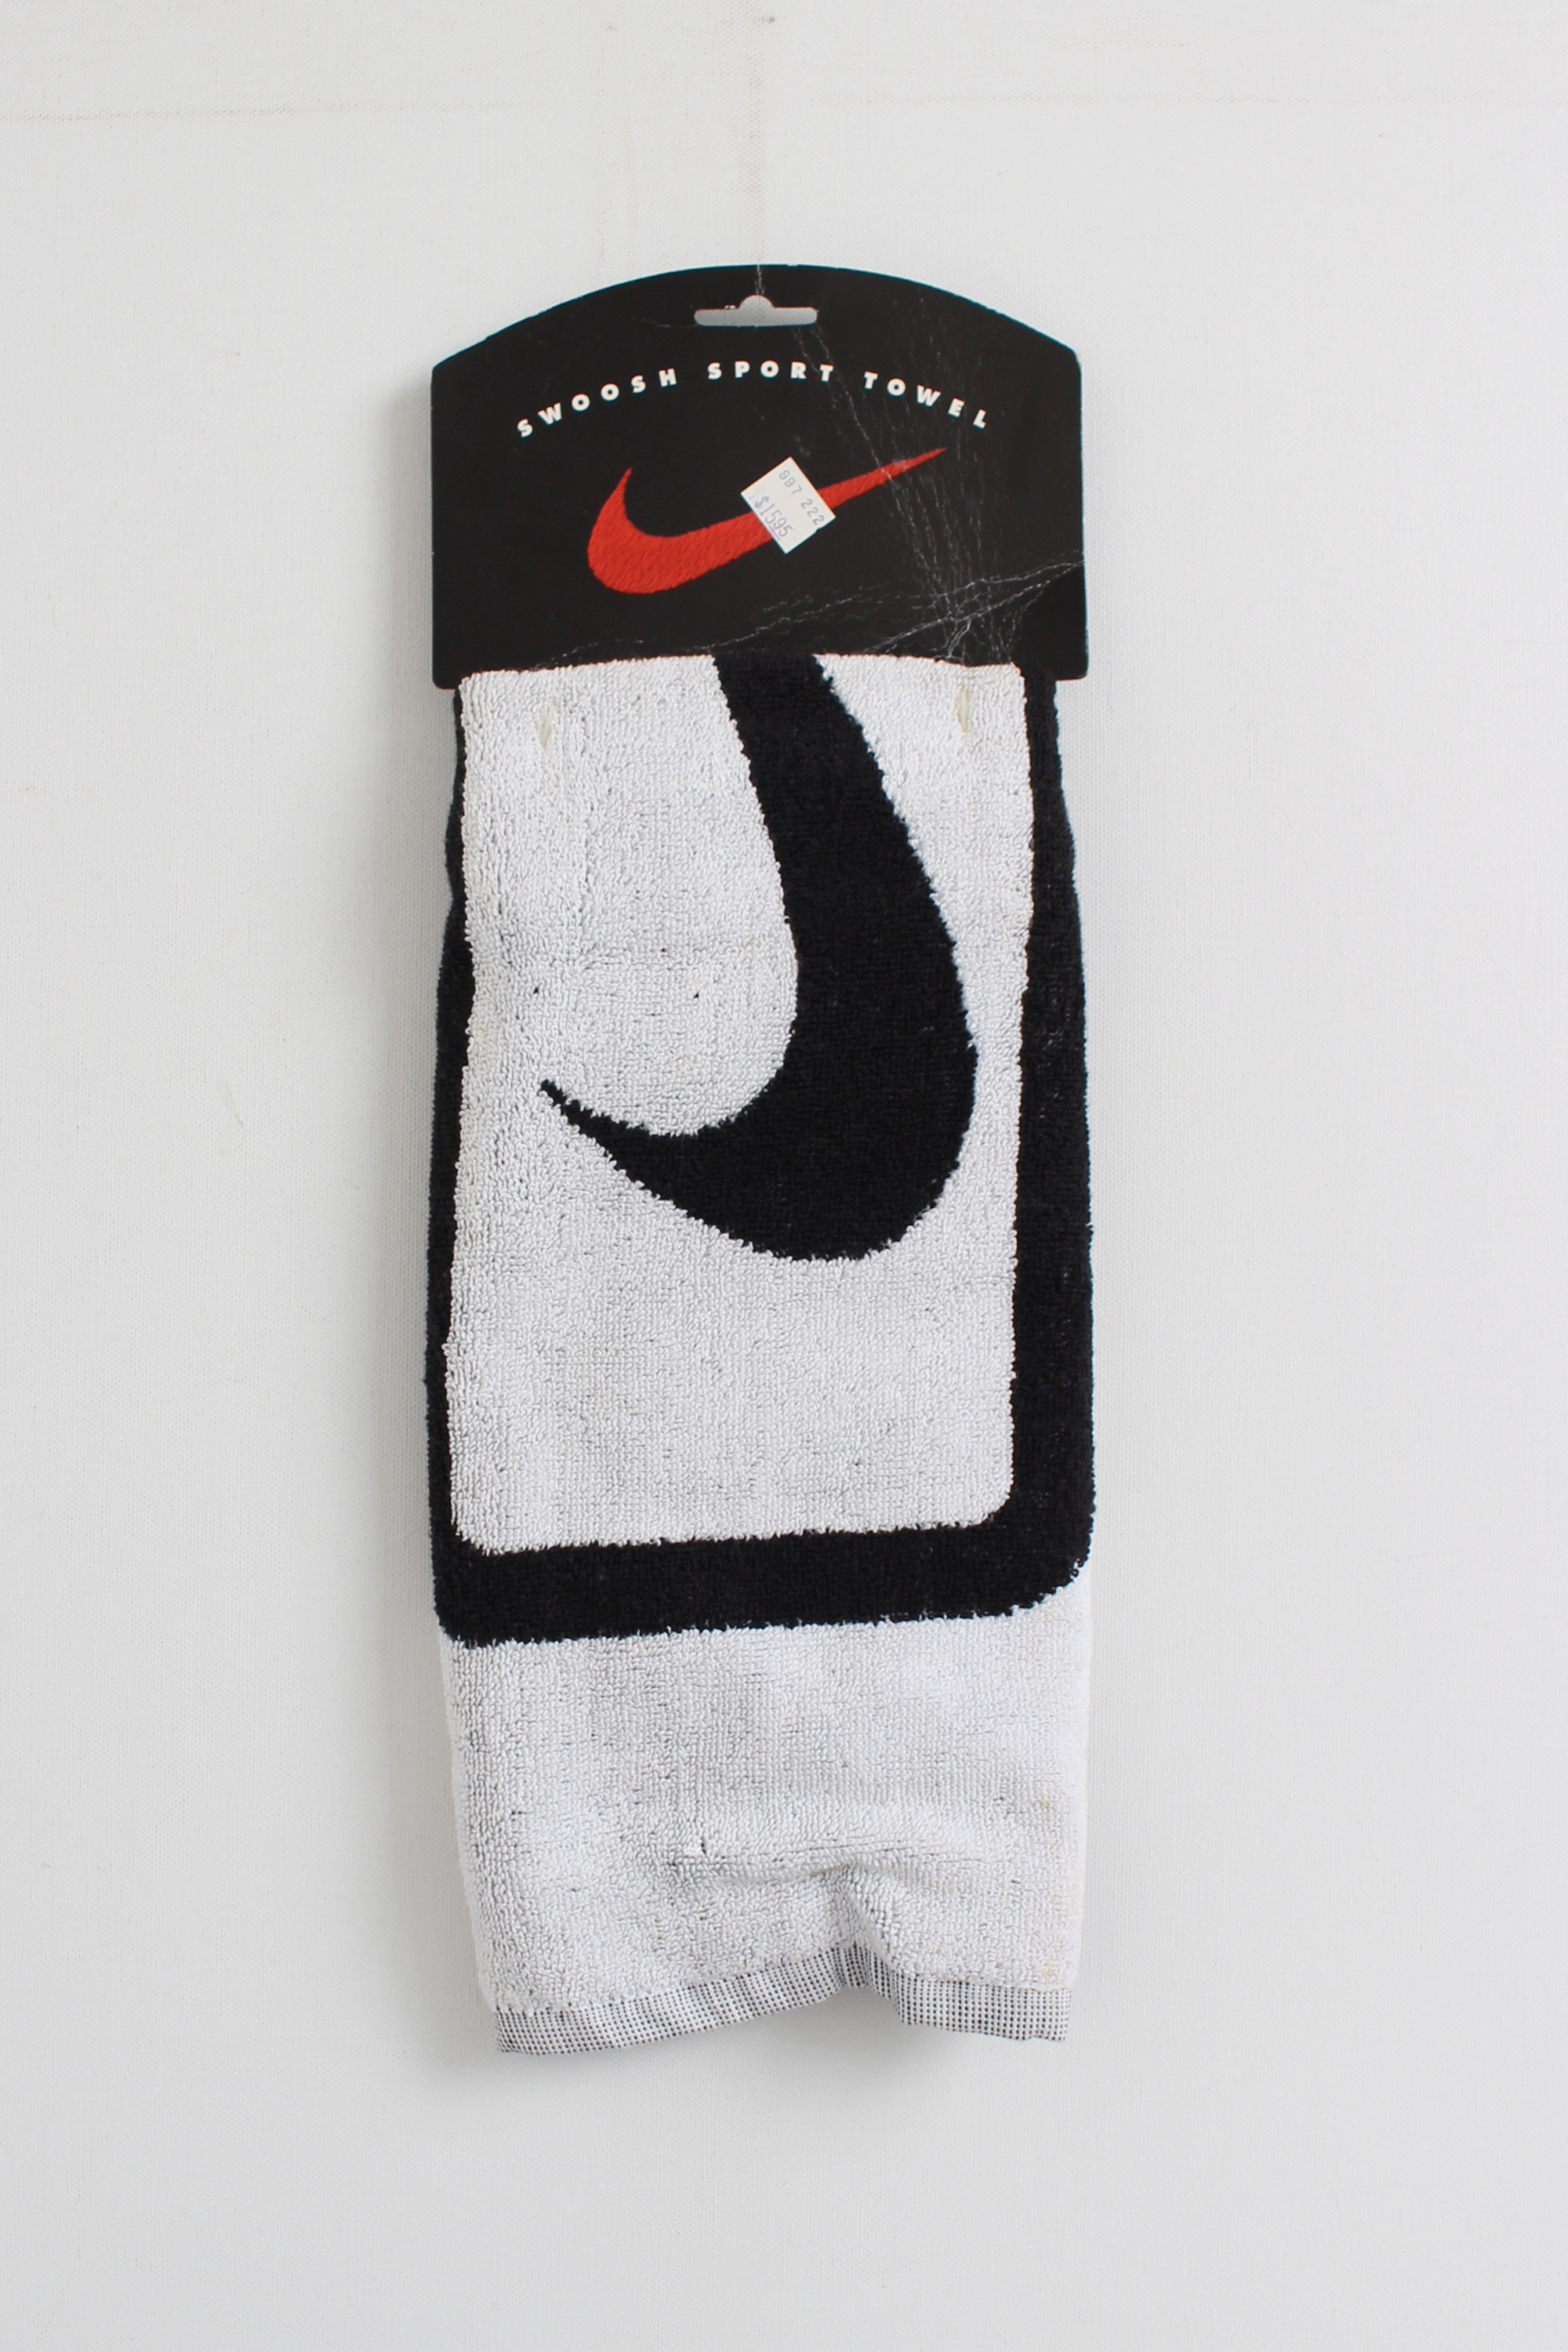 Nike towel